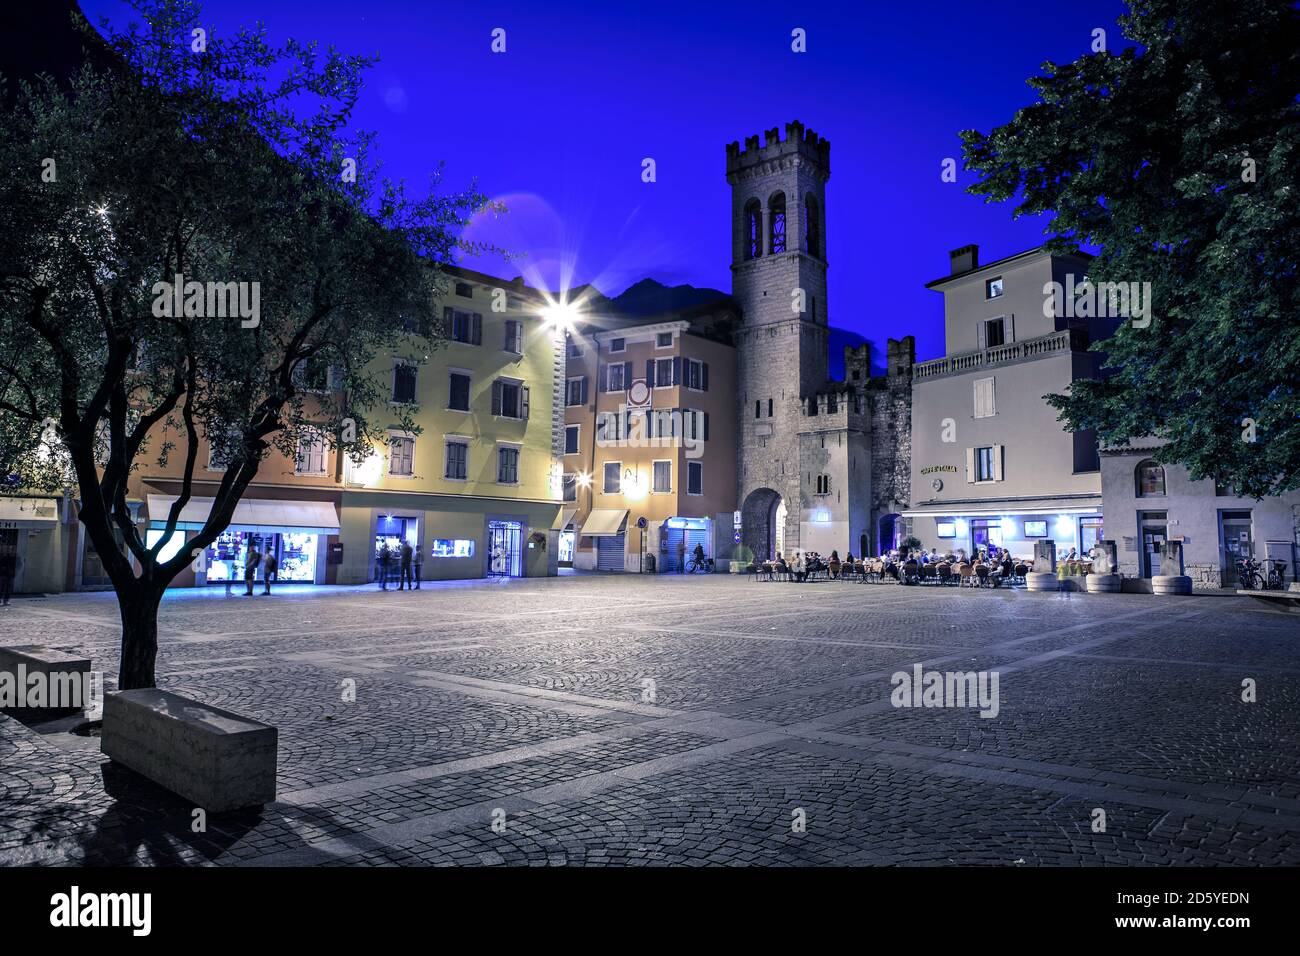 Italy, Riva del Garda, People sitting in restaurant, outdoors Stock Photo